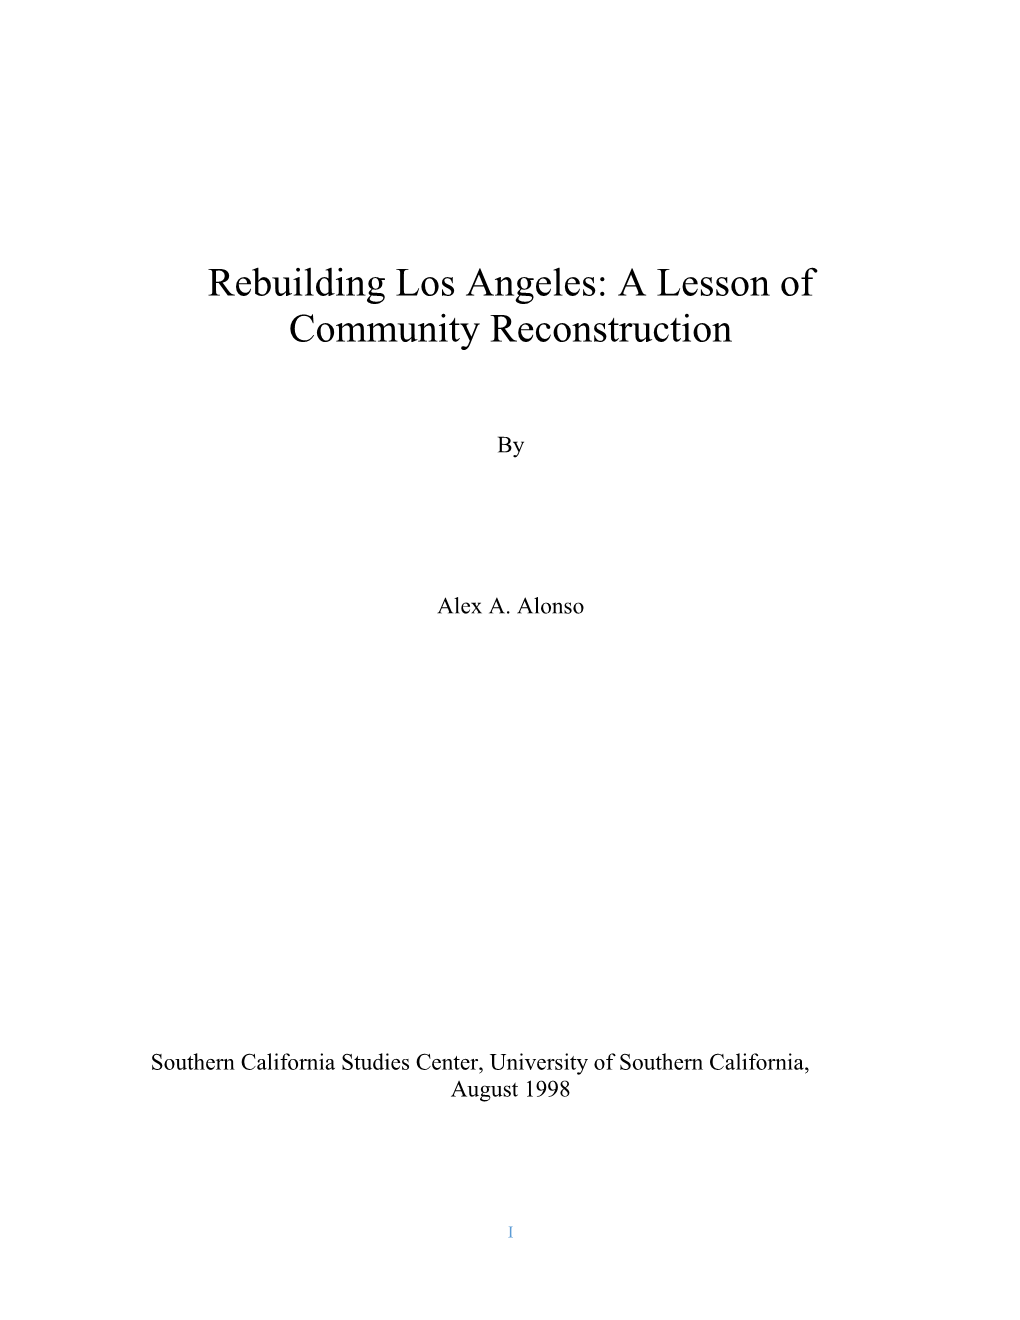 Rebuilding Los Angeles: a Lesson of Community Reconstruction